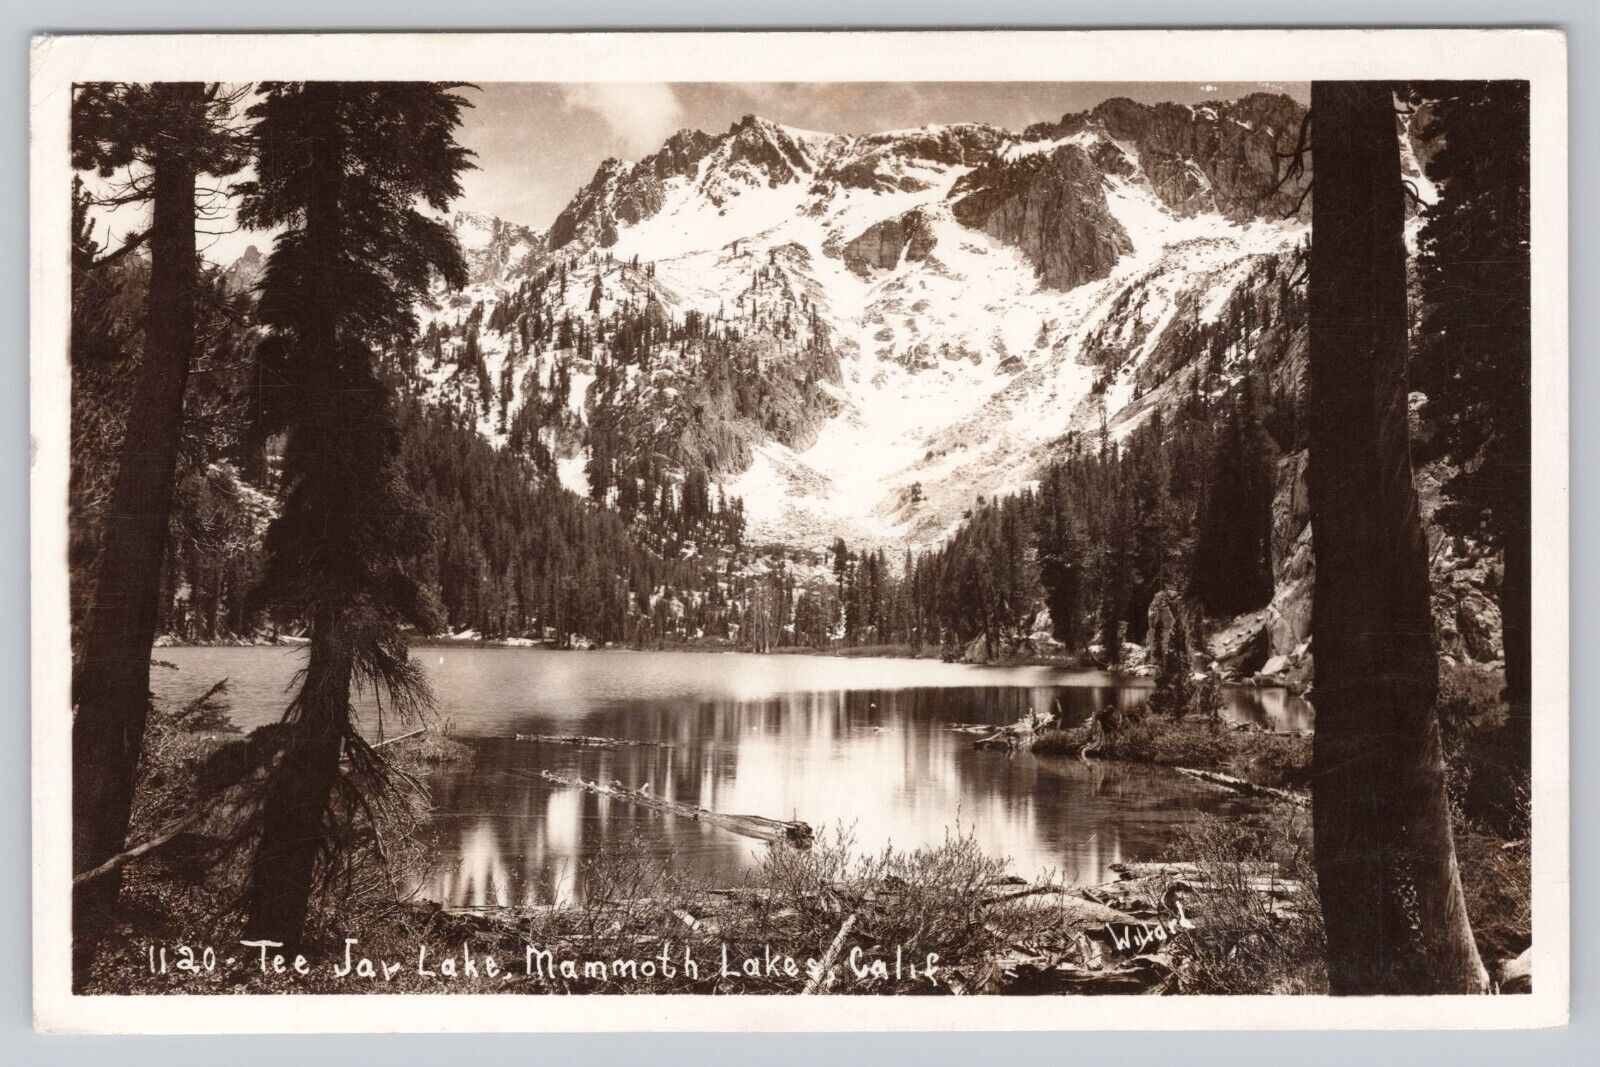 Mammoth Lakes California, Tee Jay Lake Scenic View, VTG RPPC Real Photo Postcard